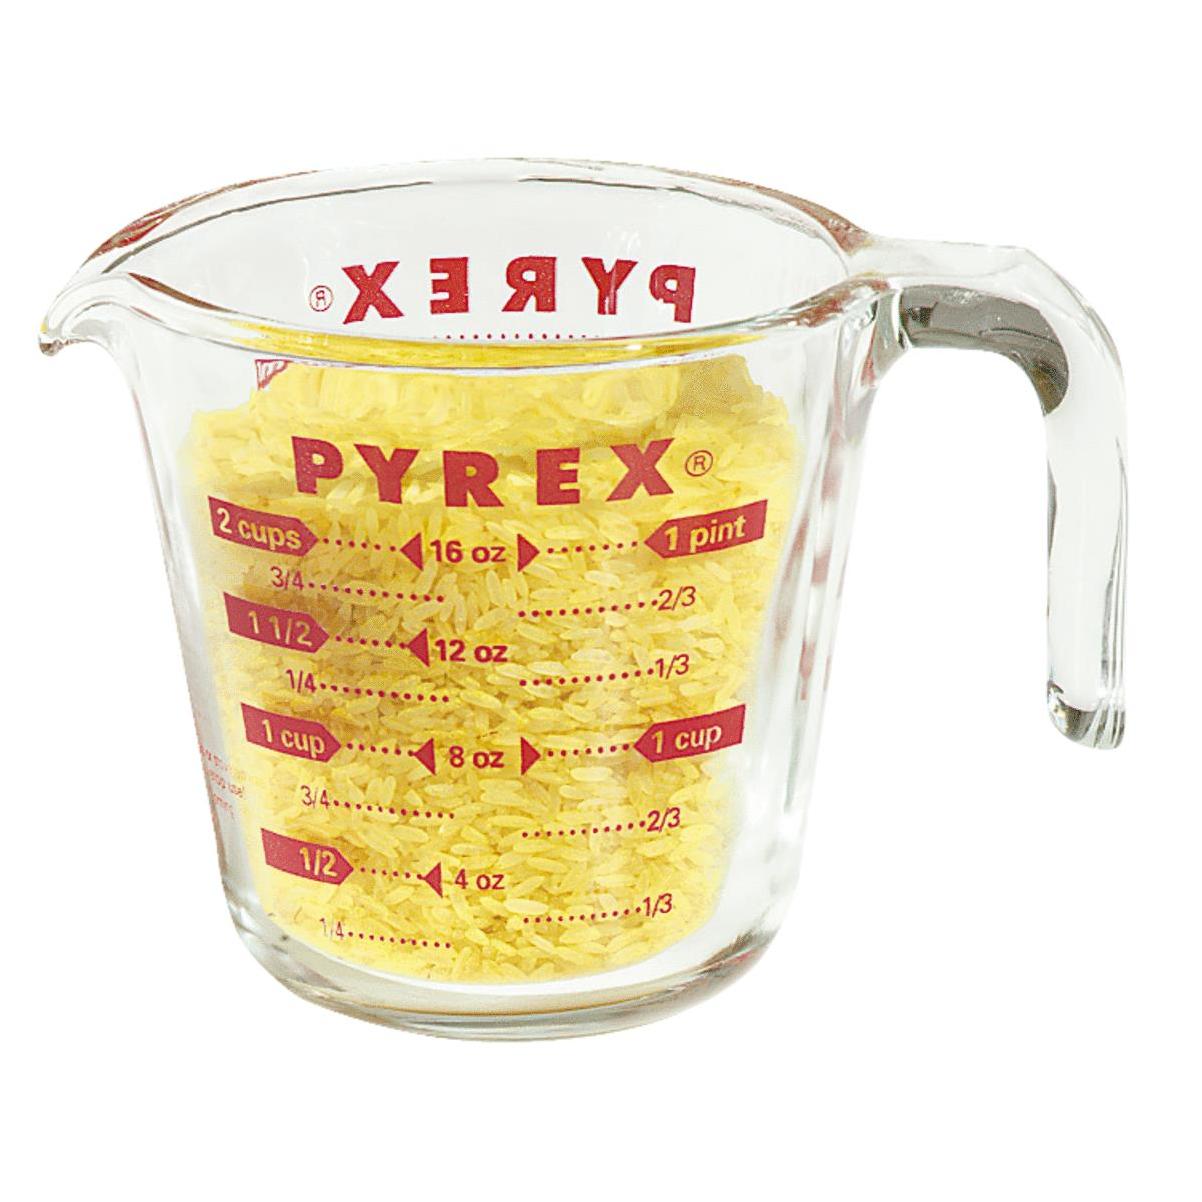 Pyrex Prepware 2-Cup Glass Measuring Cup